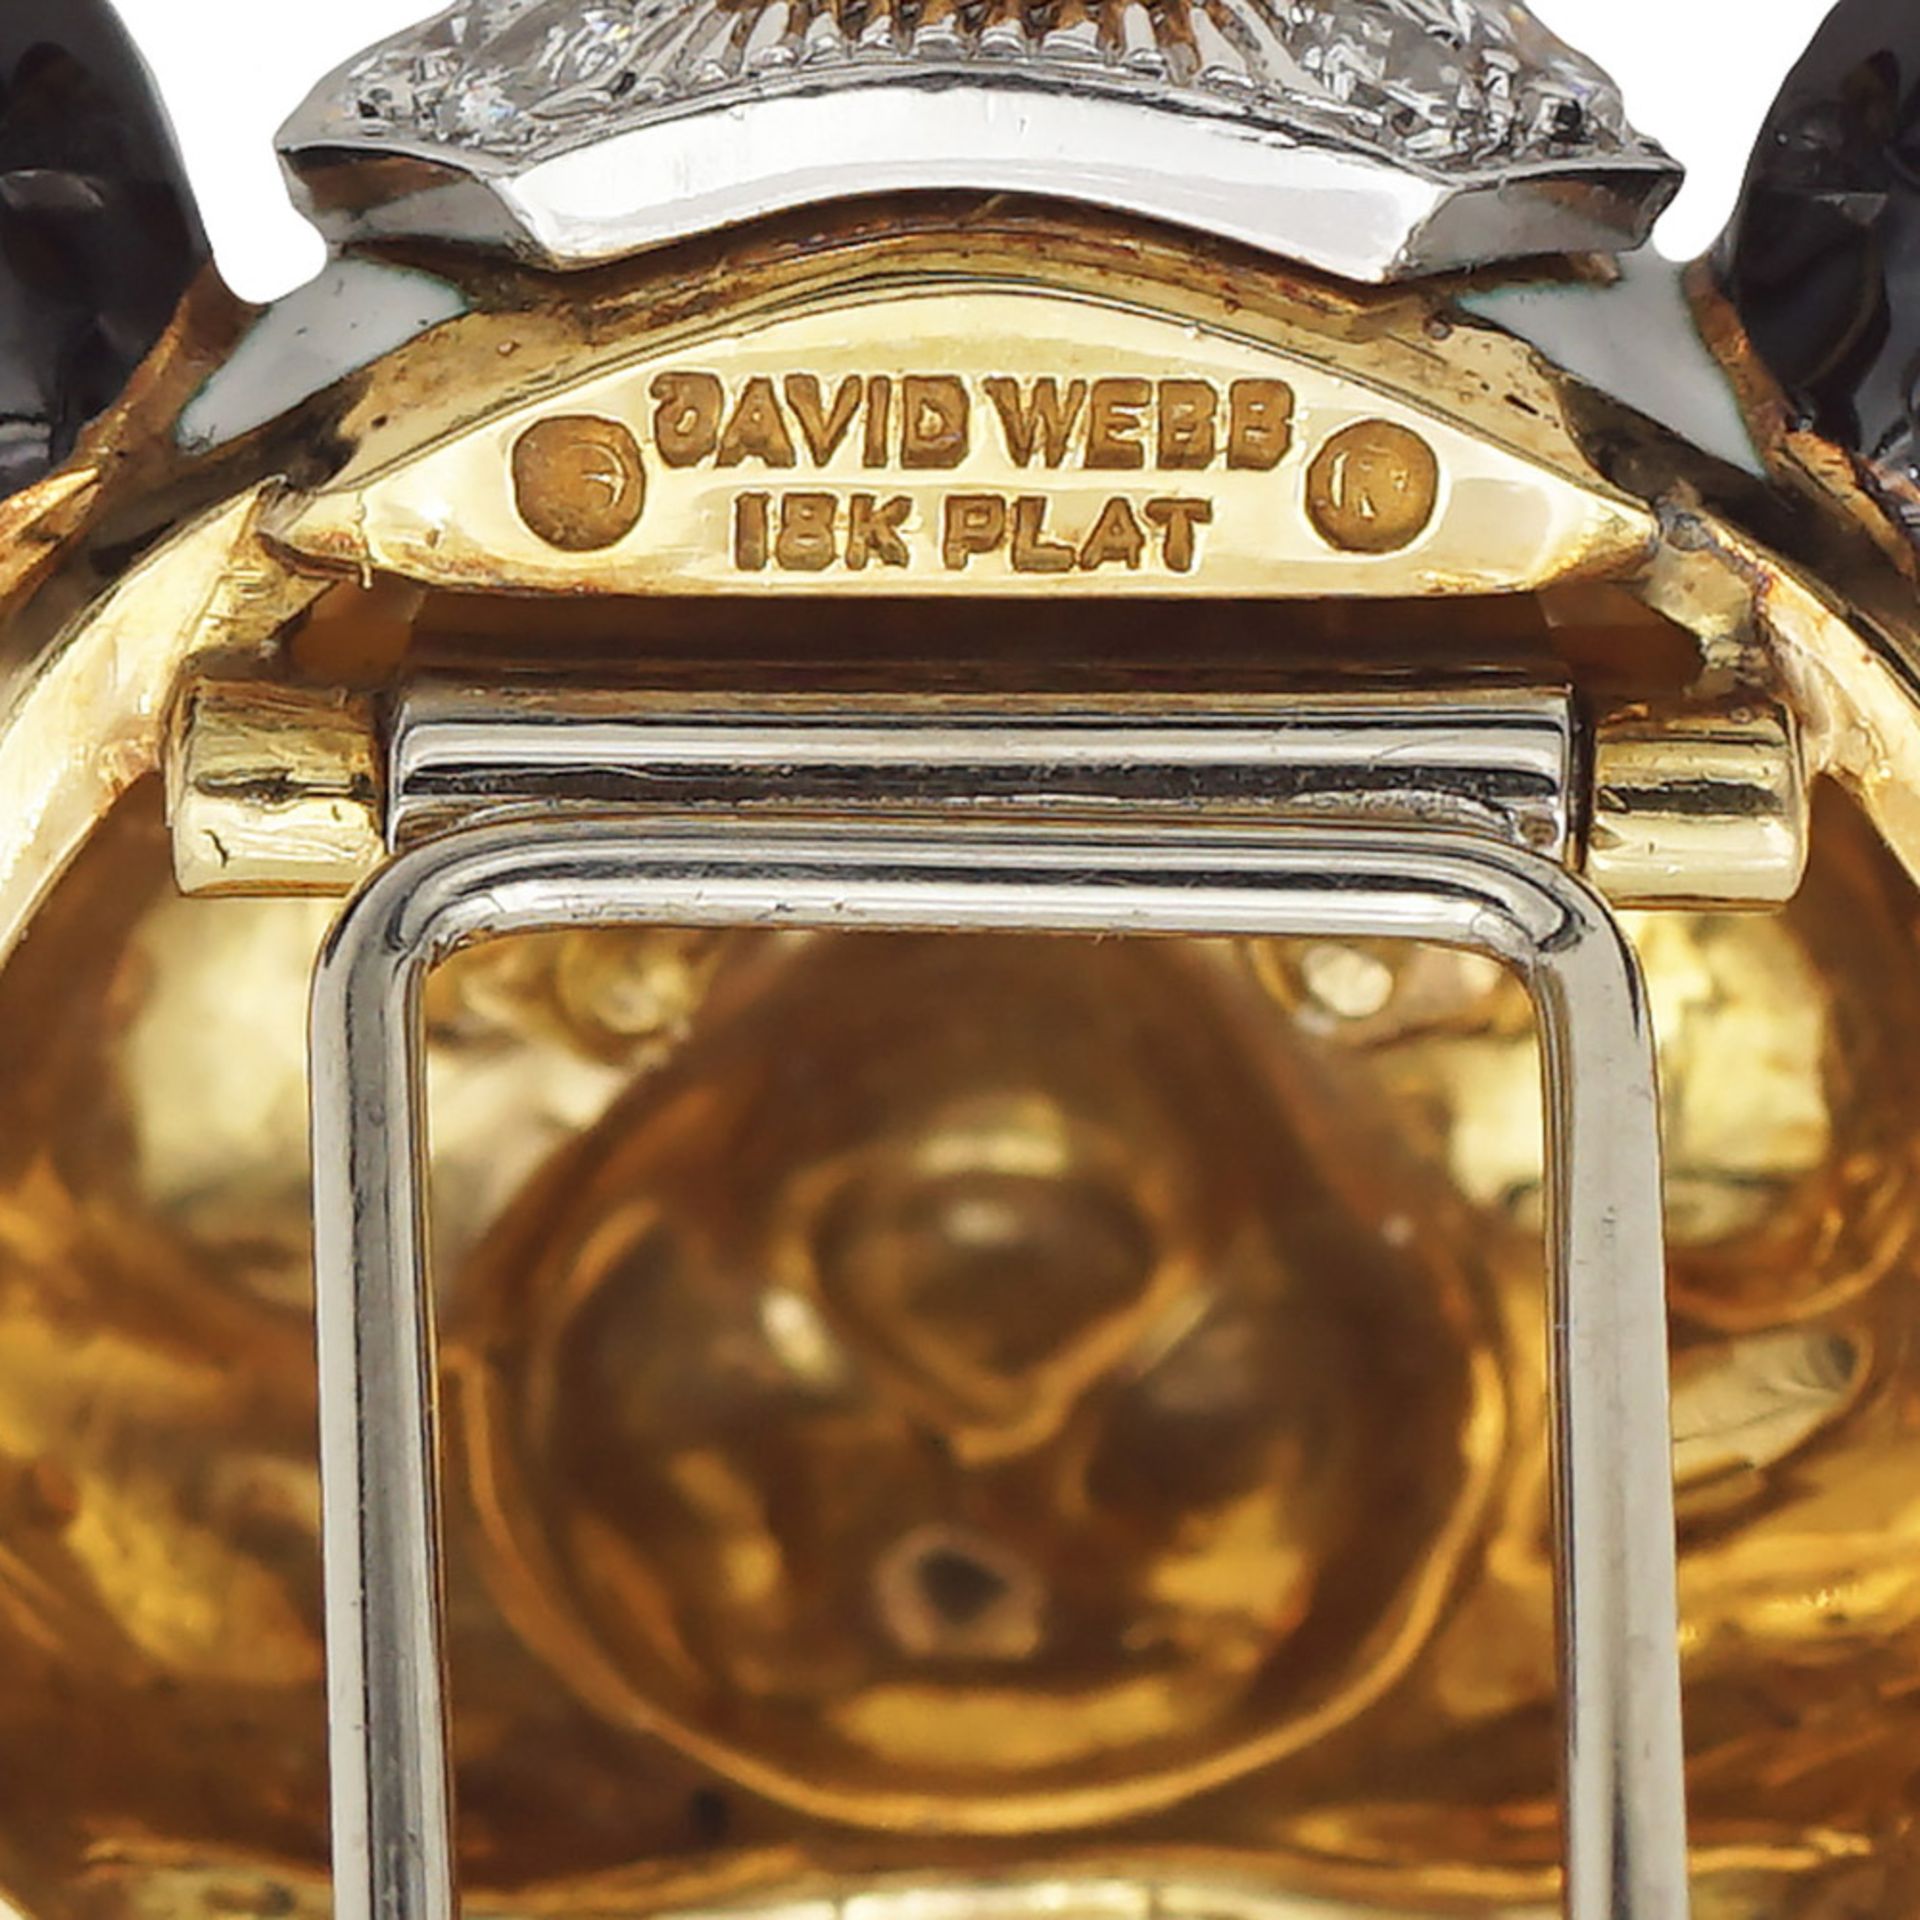 David Webb, 18kt yellow gold and platinum "Panda" brooch 1970/80s weight 47,7 gr. - Image 2 of 2